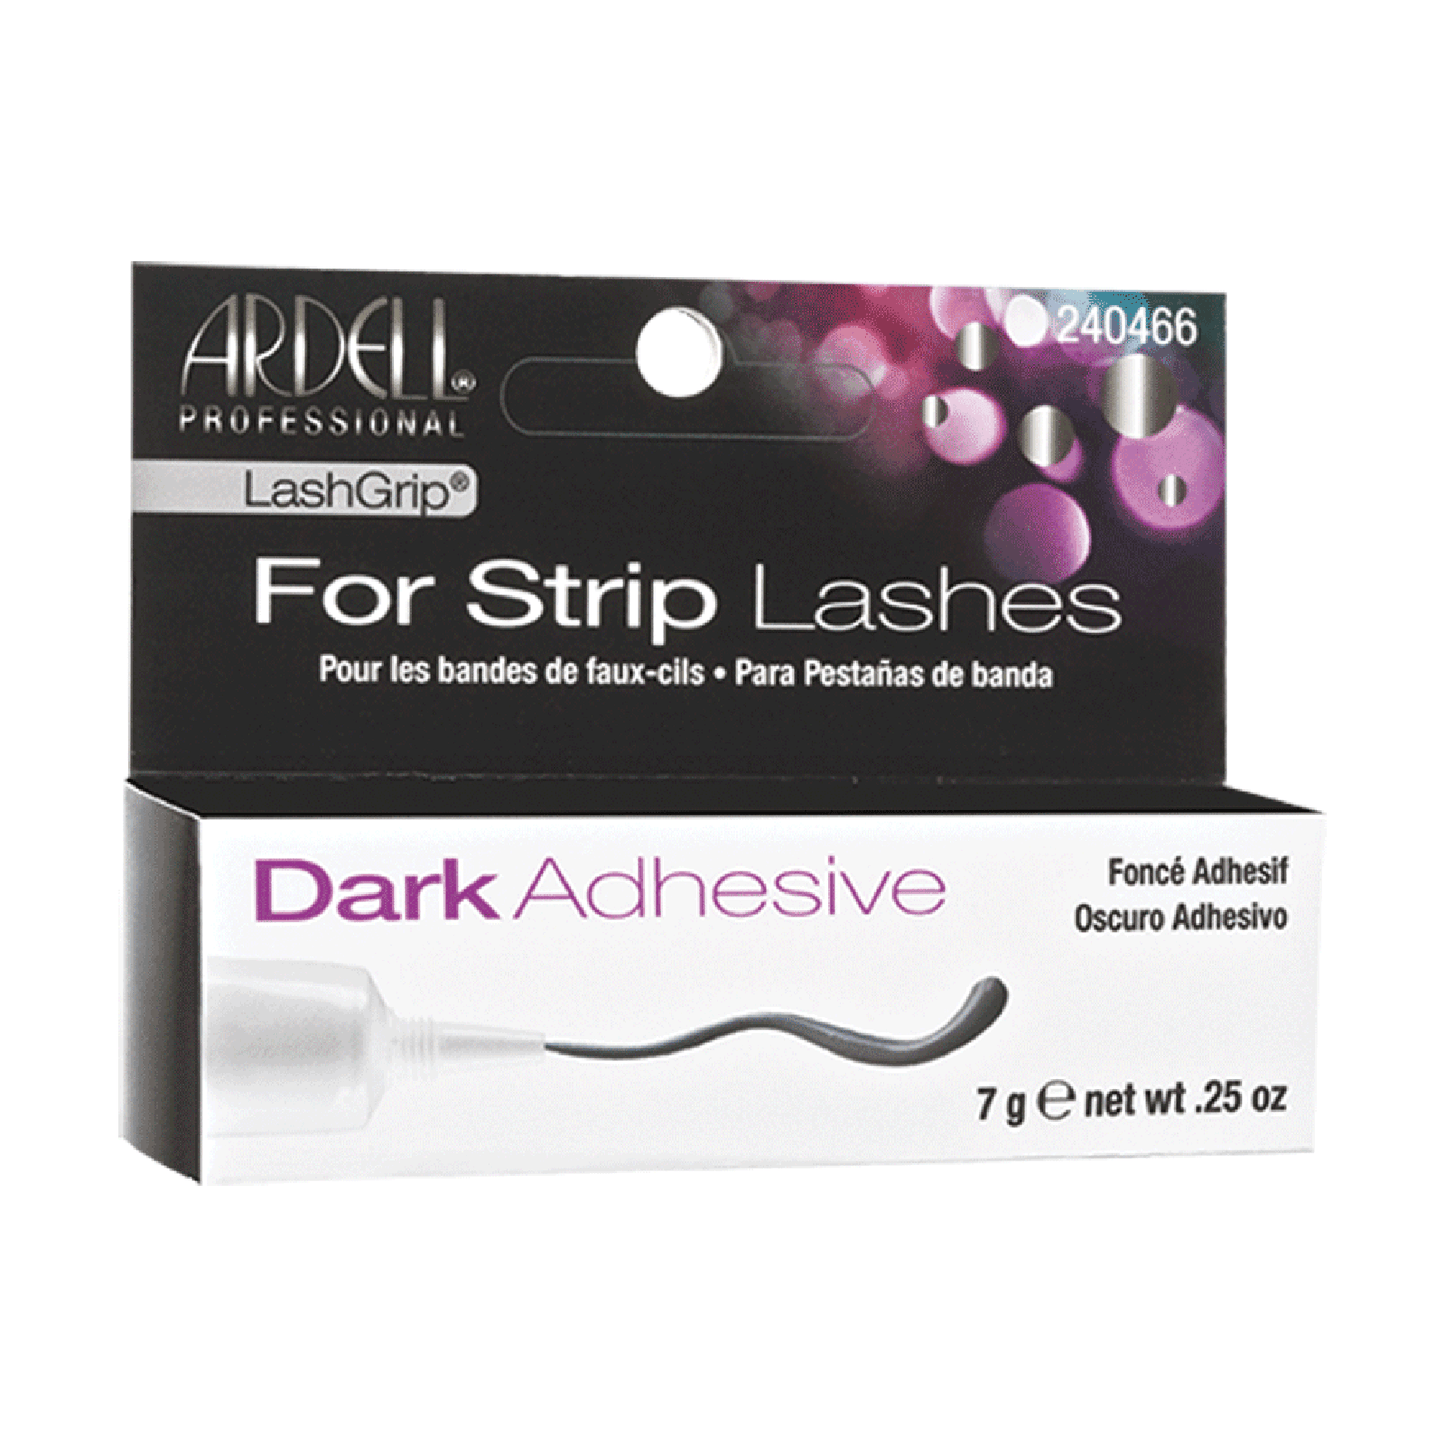 Ardell LashGrip Adhesive Strip Lashes-Dark - 0.25Oz